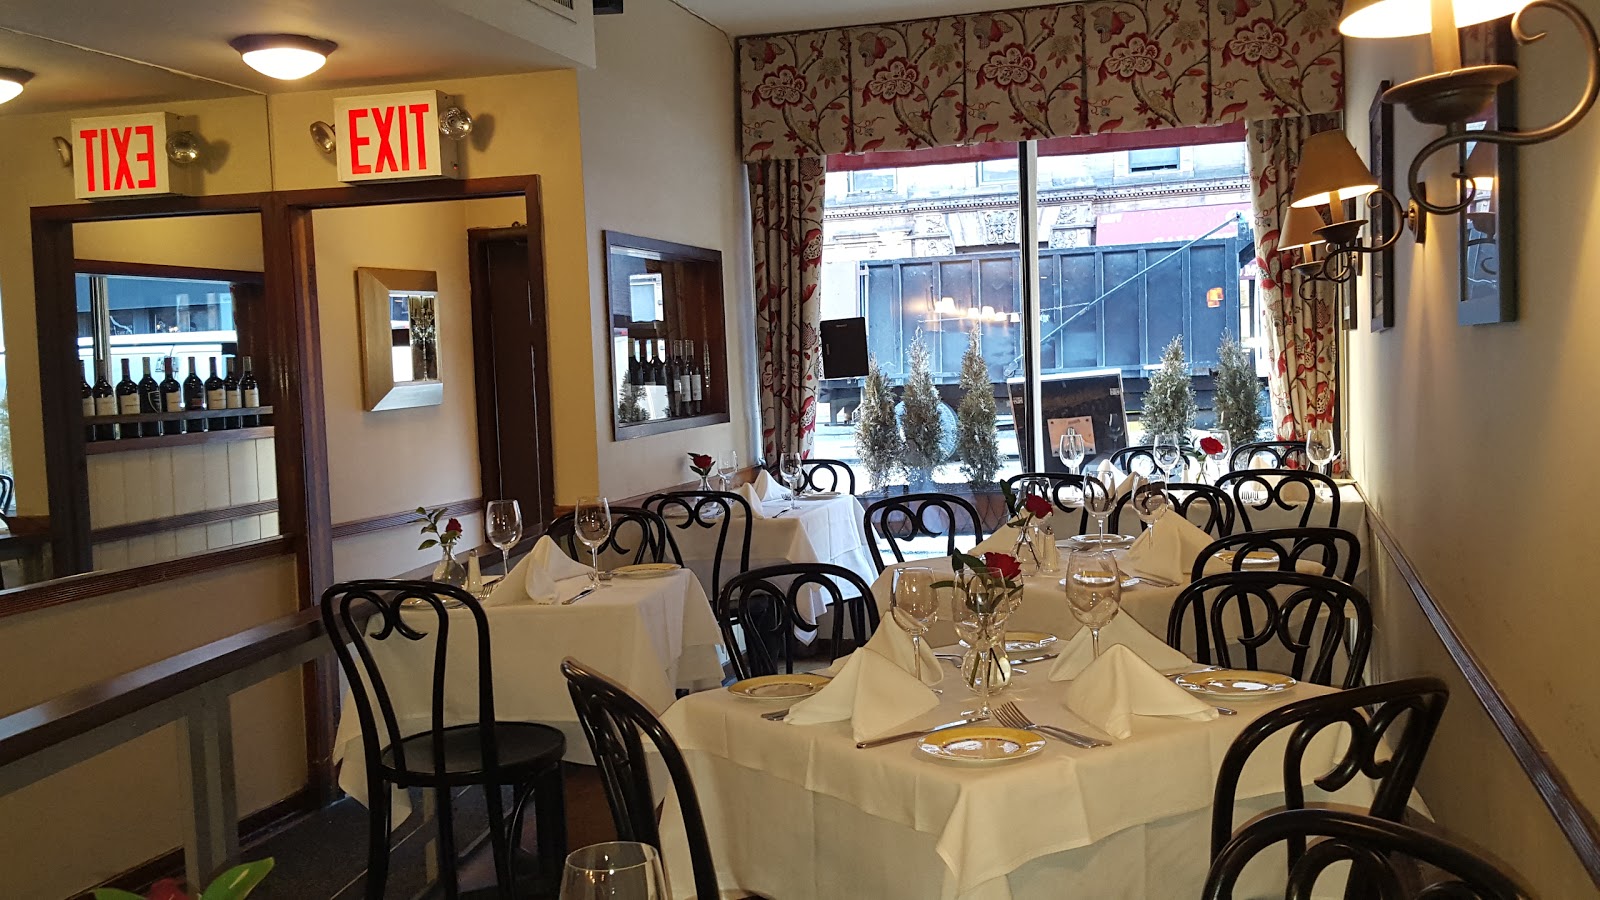 Photo of Lex Restaurant in New York City, New York, United States - 4 Picture of Restaurant, Food, Point of interest, Establishment, Bar